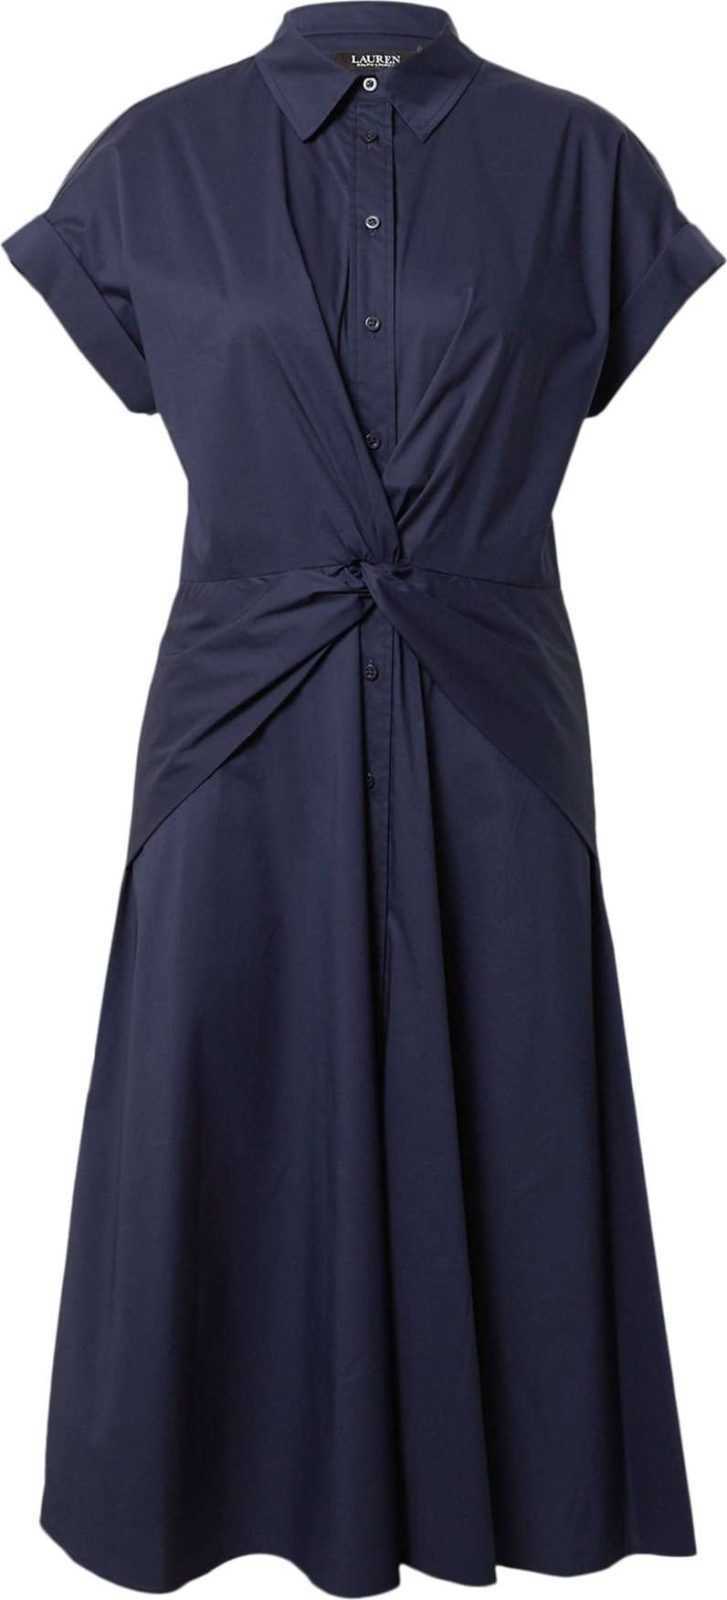 Lauren Ralph Lauren Košilové šaty 'Cian' marine modrá